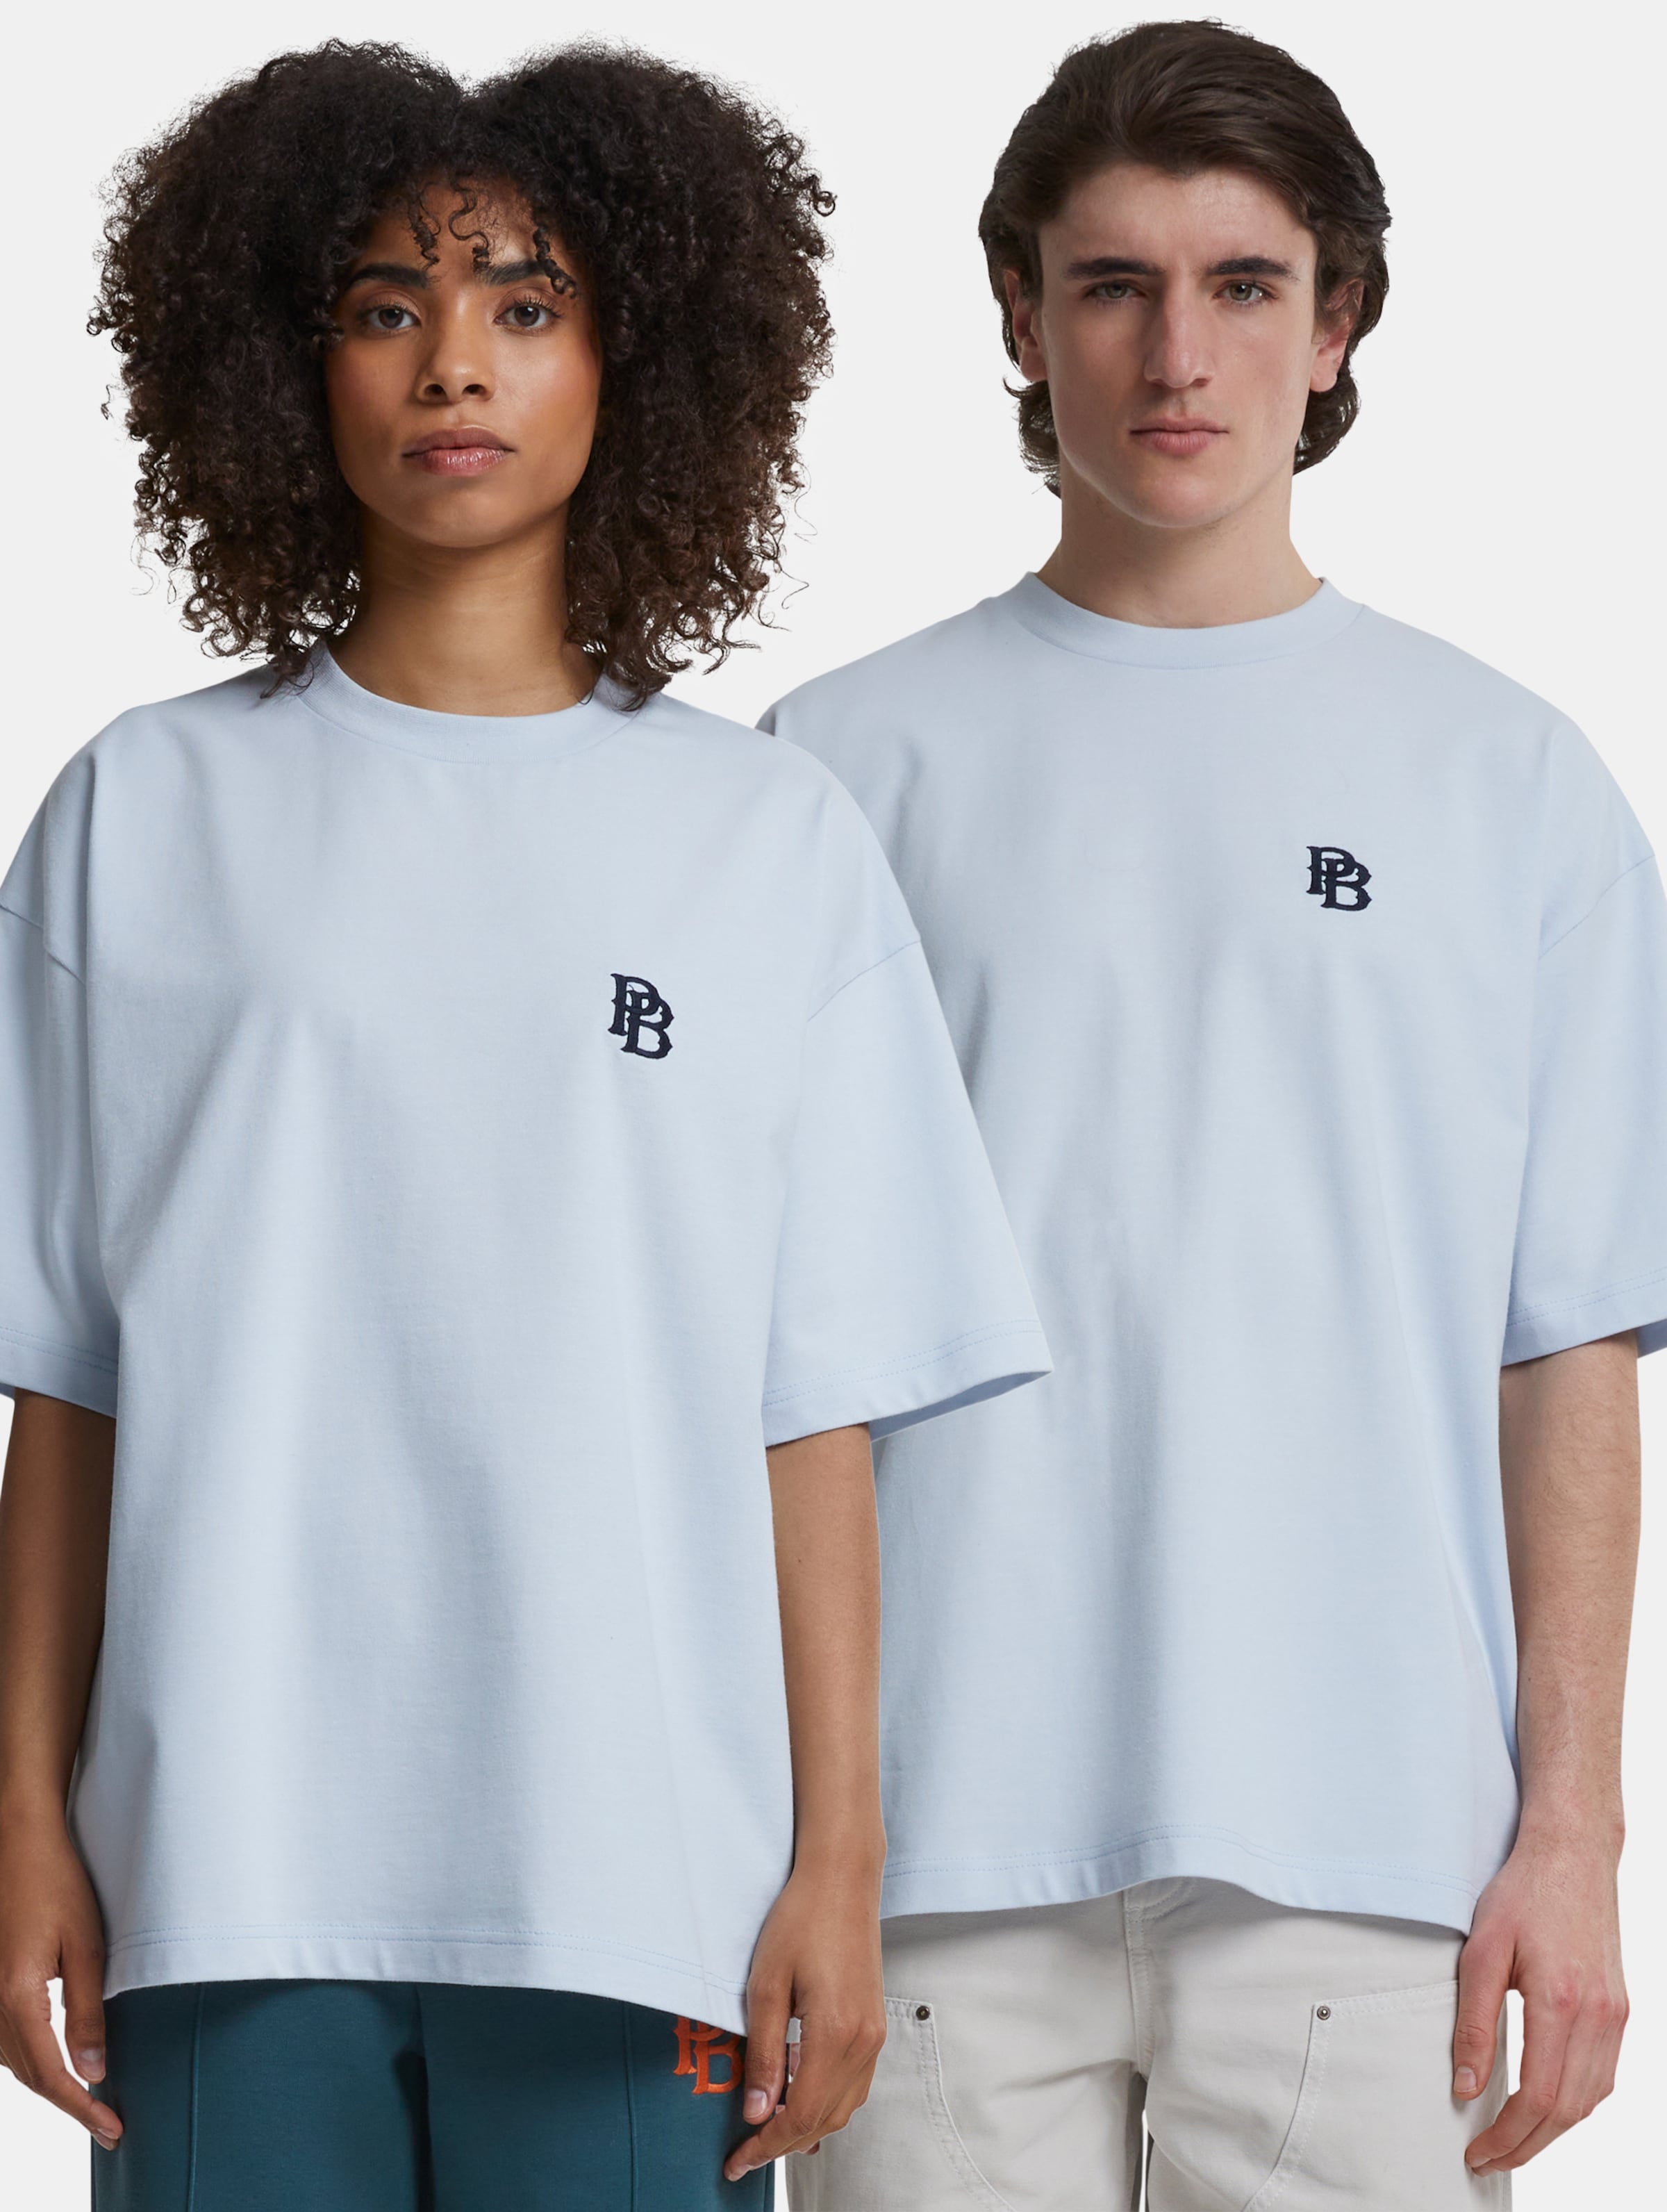 Prohibited Pitch T-Shirts Frauen,Männer,Unisex op kleur blauw, Maat L